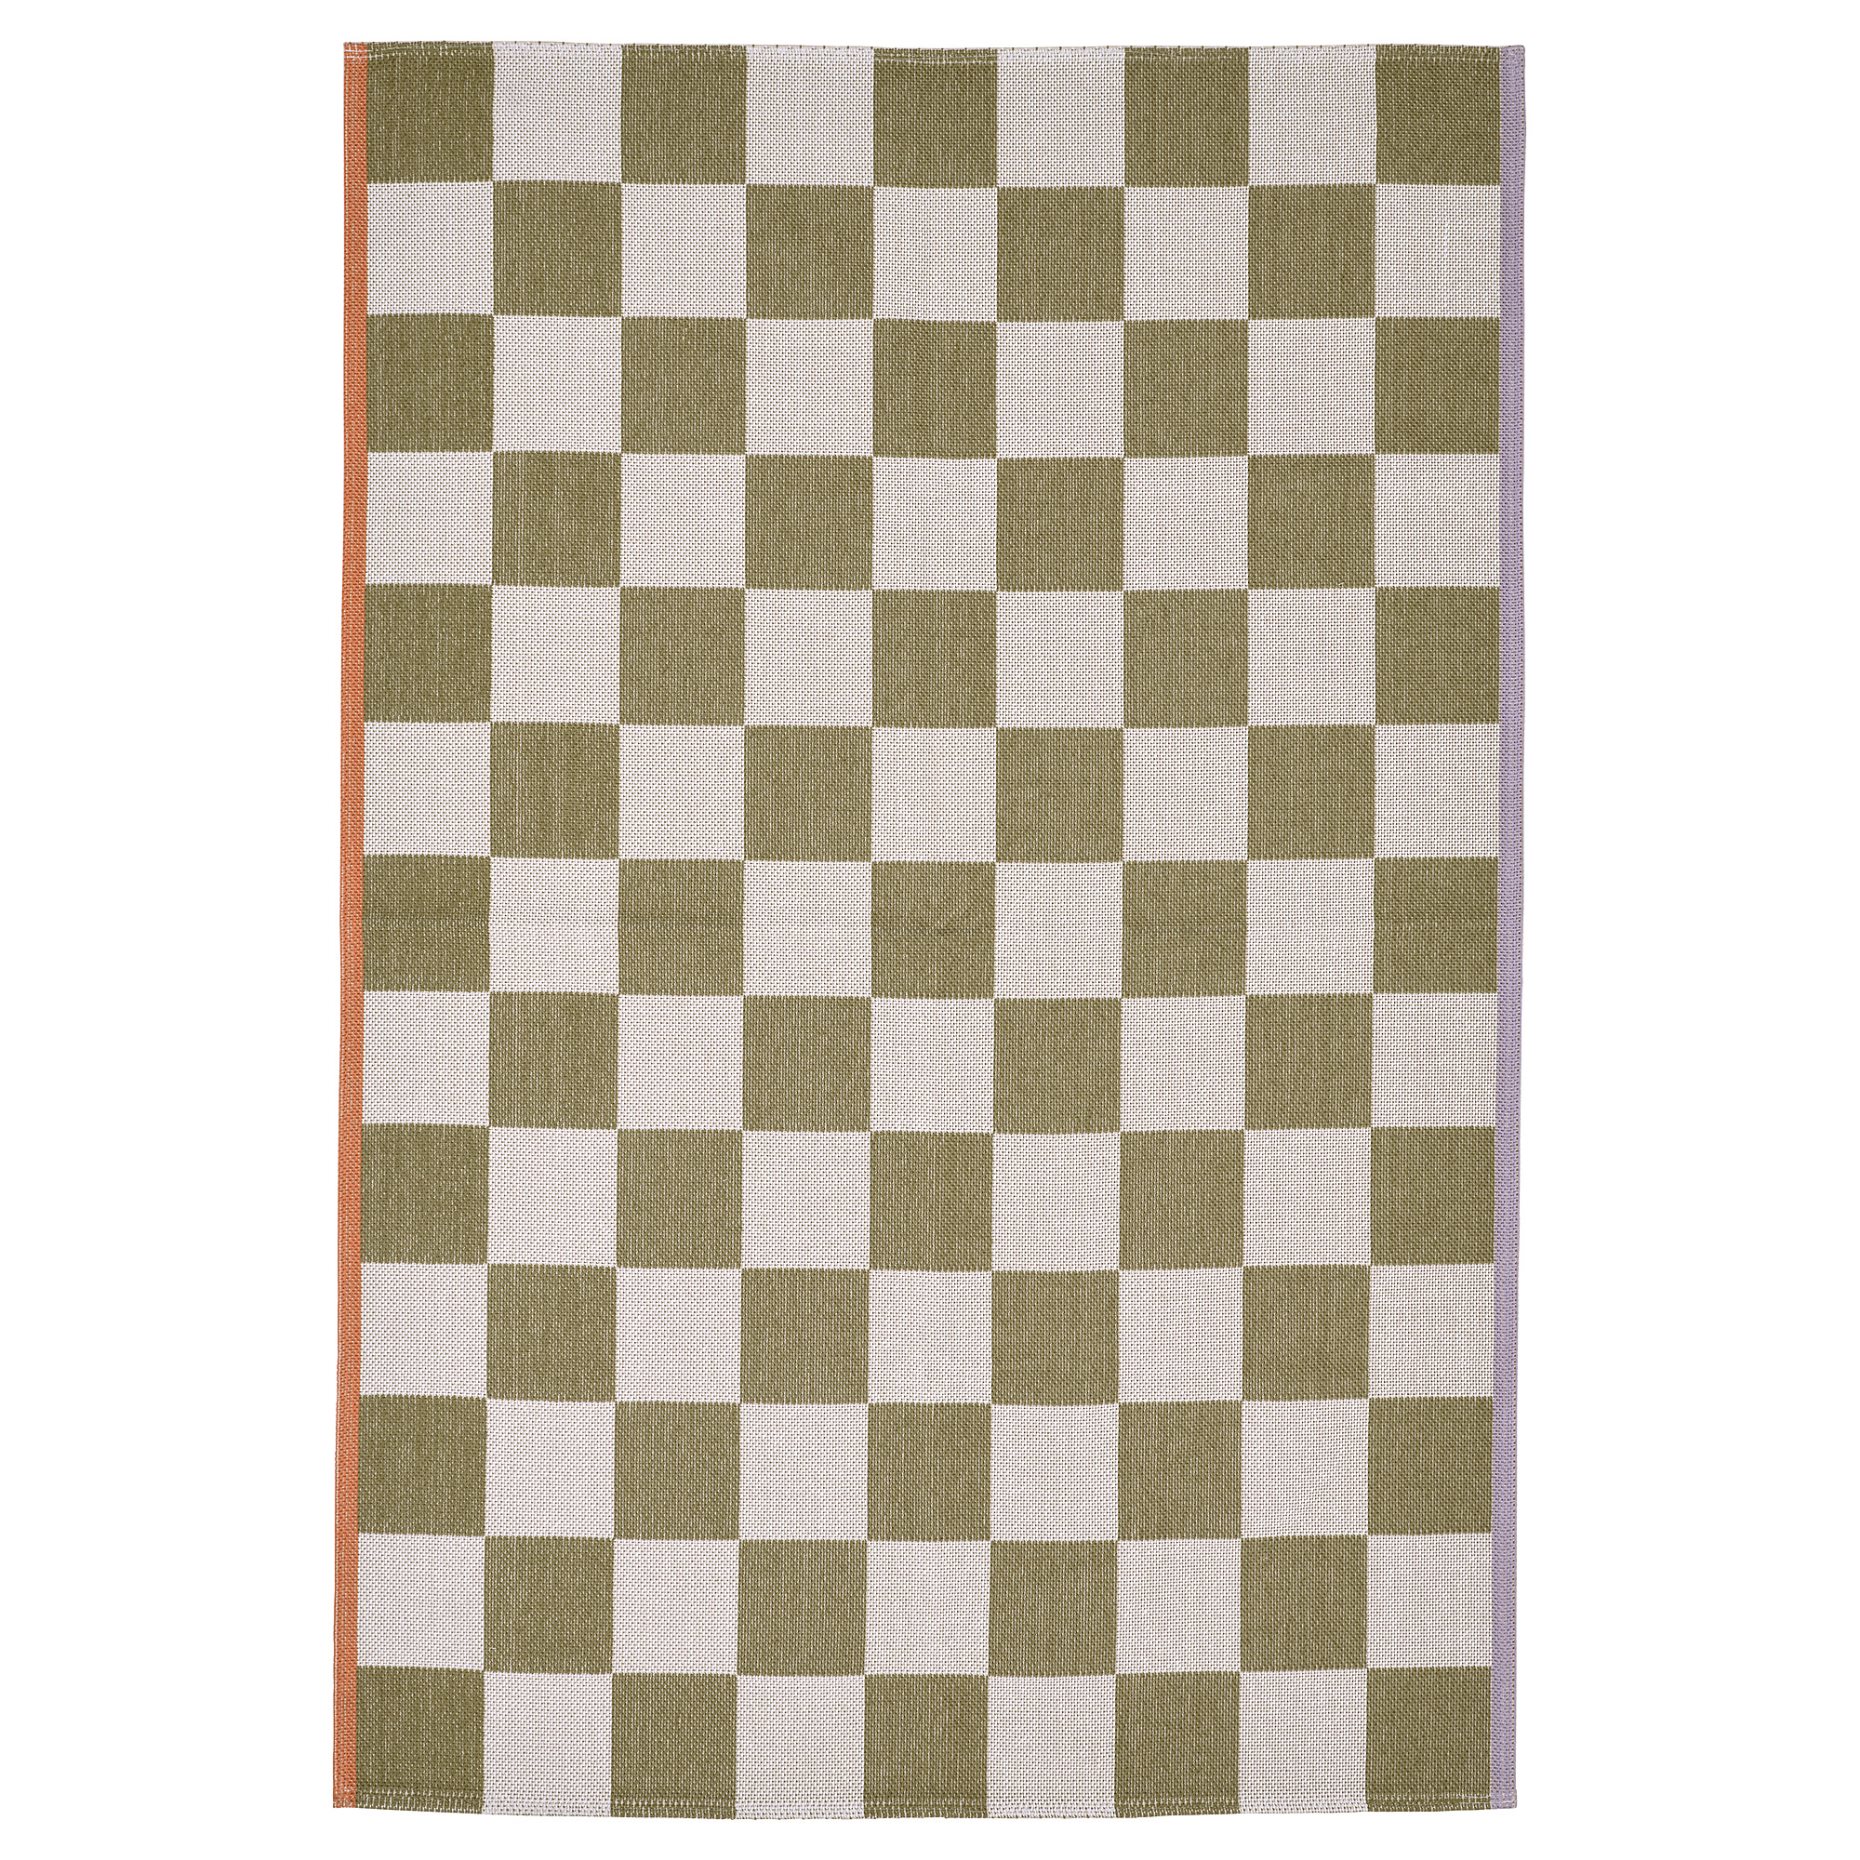 KLASSRUM, χαλί χαμηλή πλέξη, 133x195 cm, 005.558.63